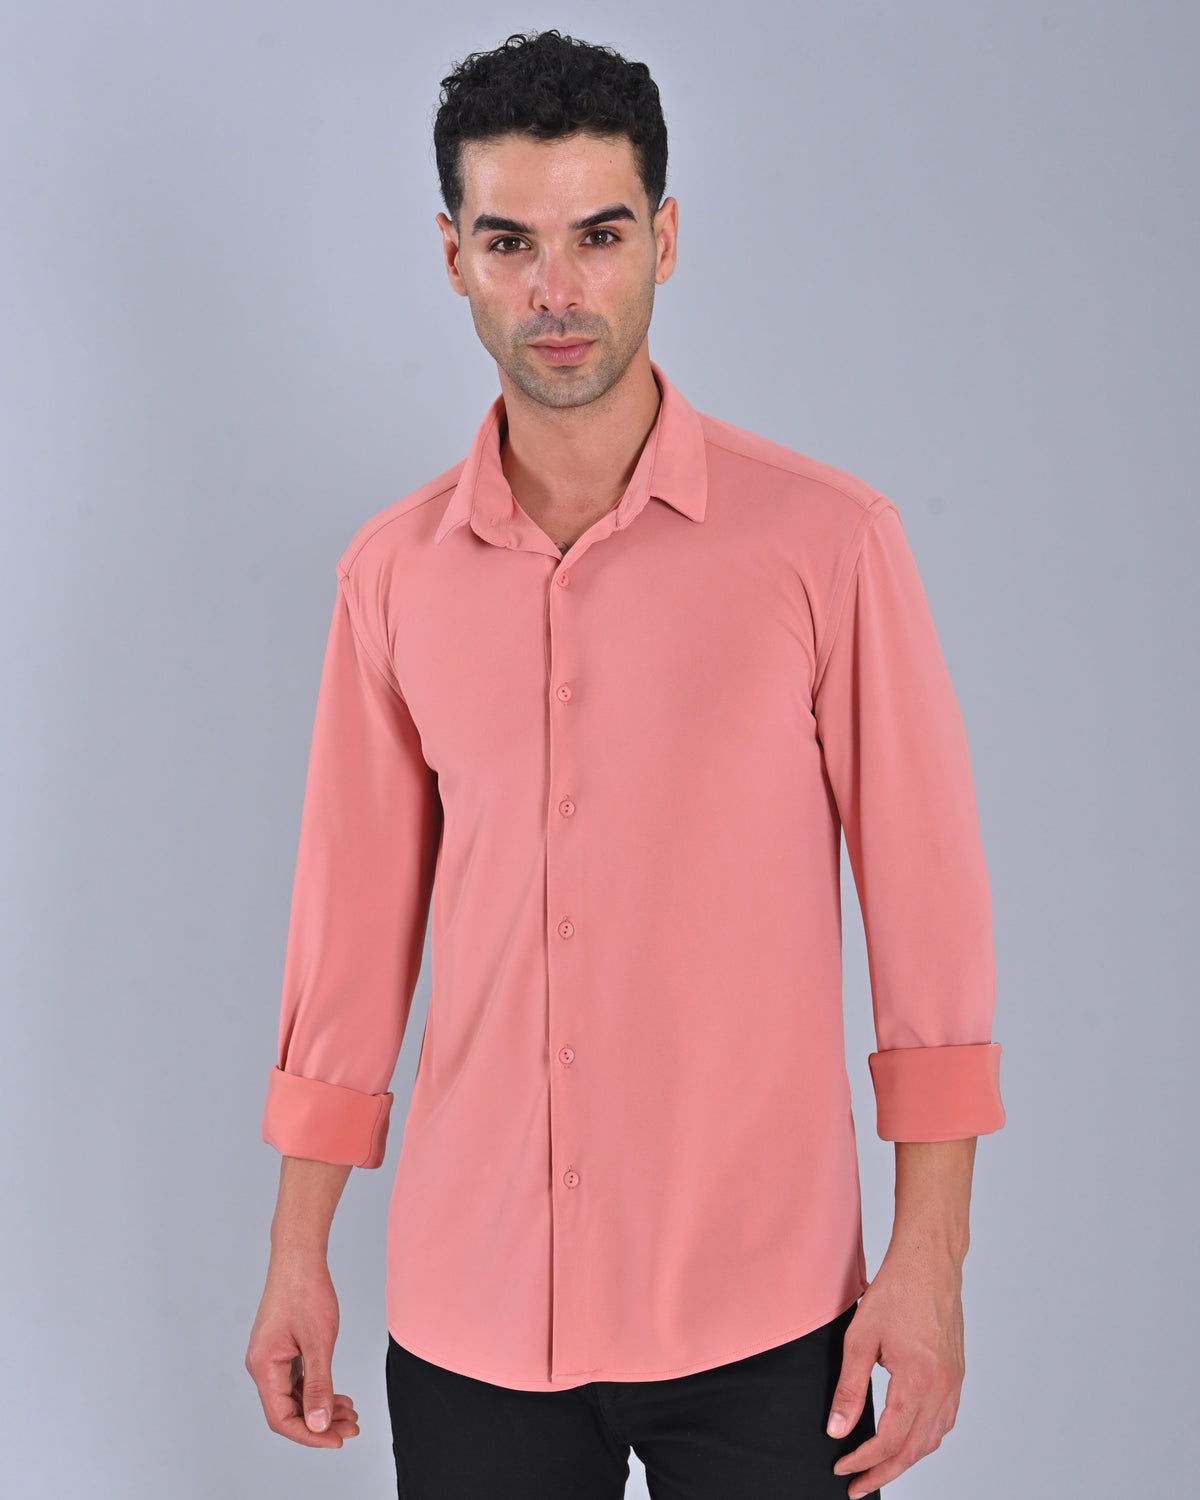 Men's Salmon Pink Cross Knit Shirt